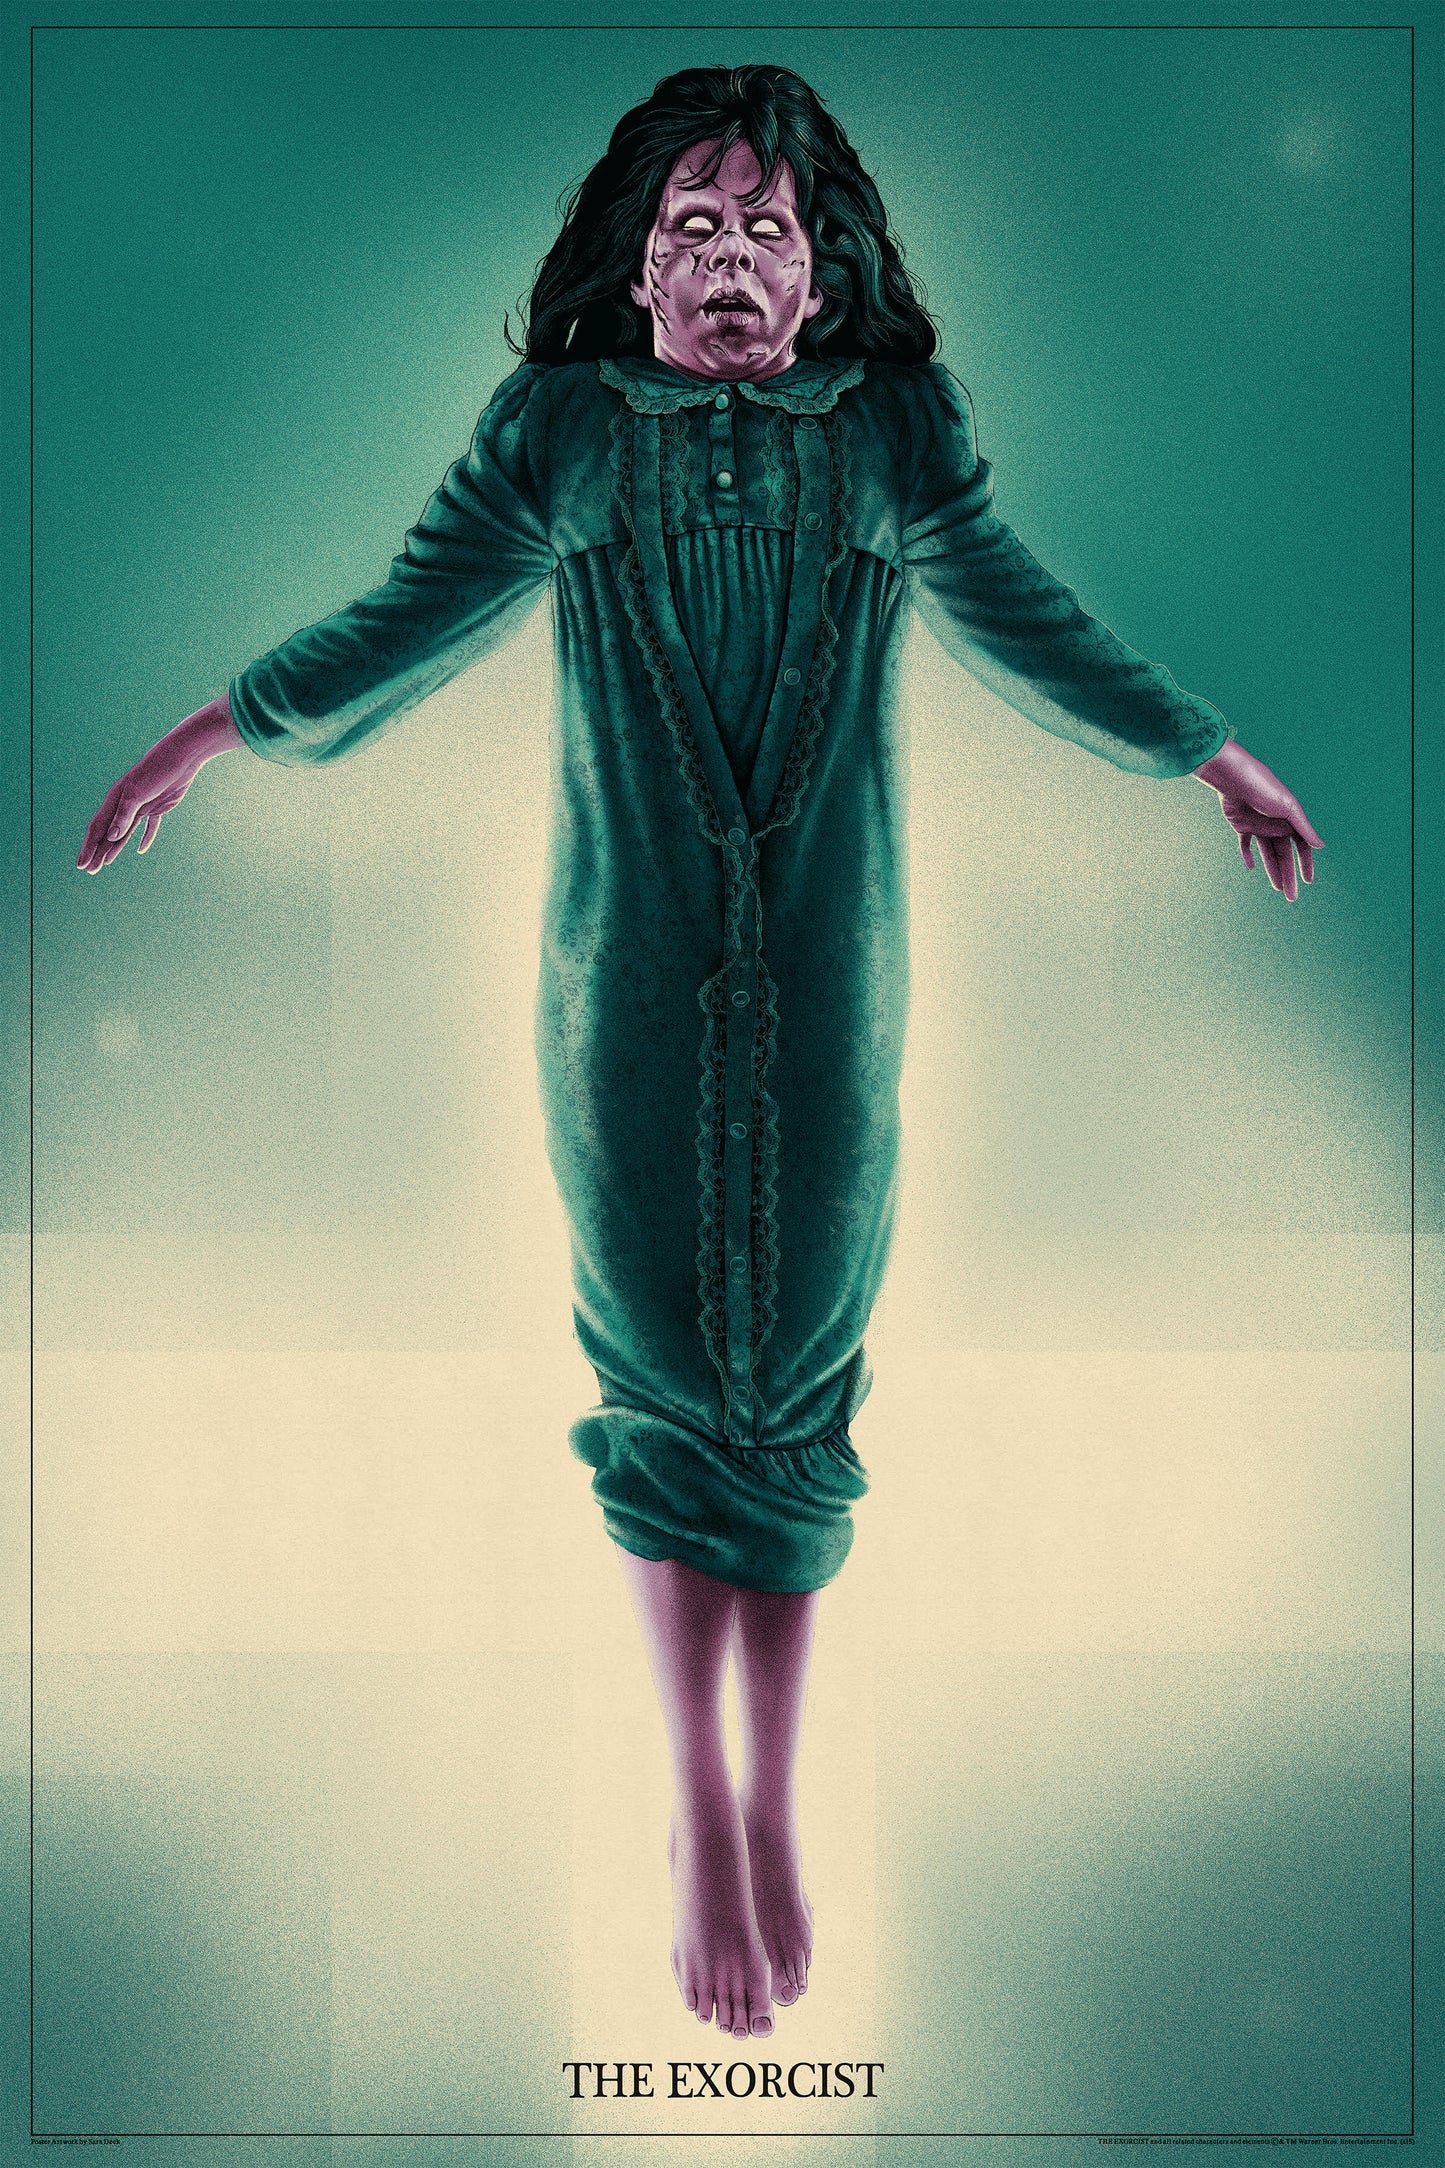 Sara Deck "The Exorcist"